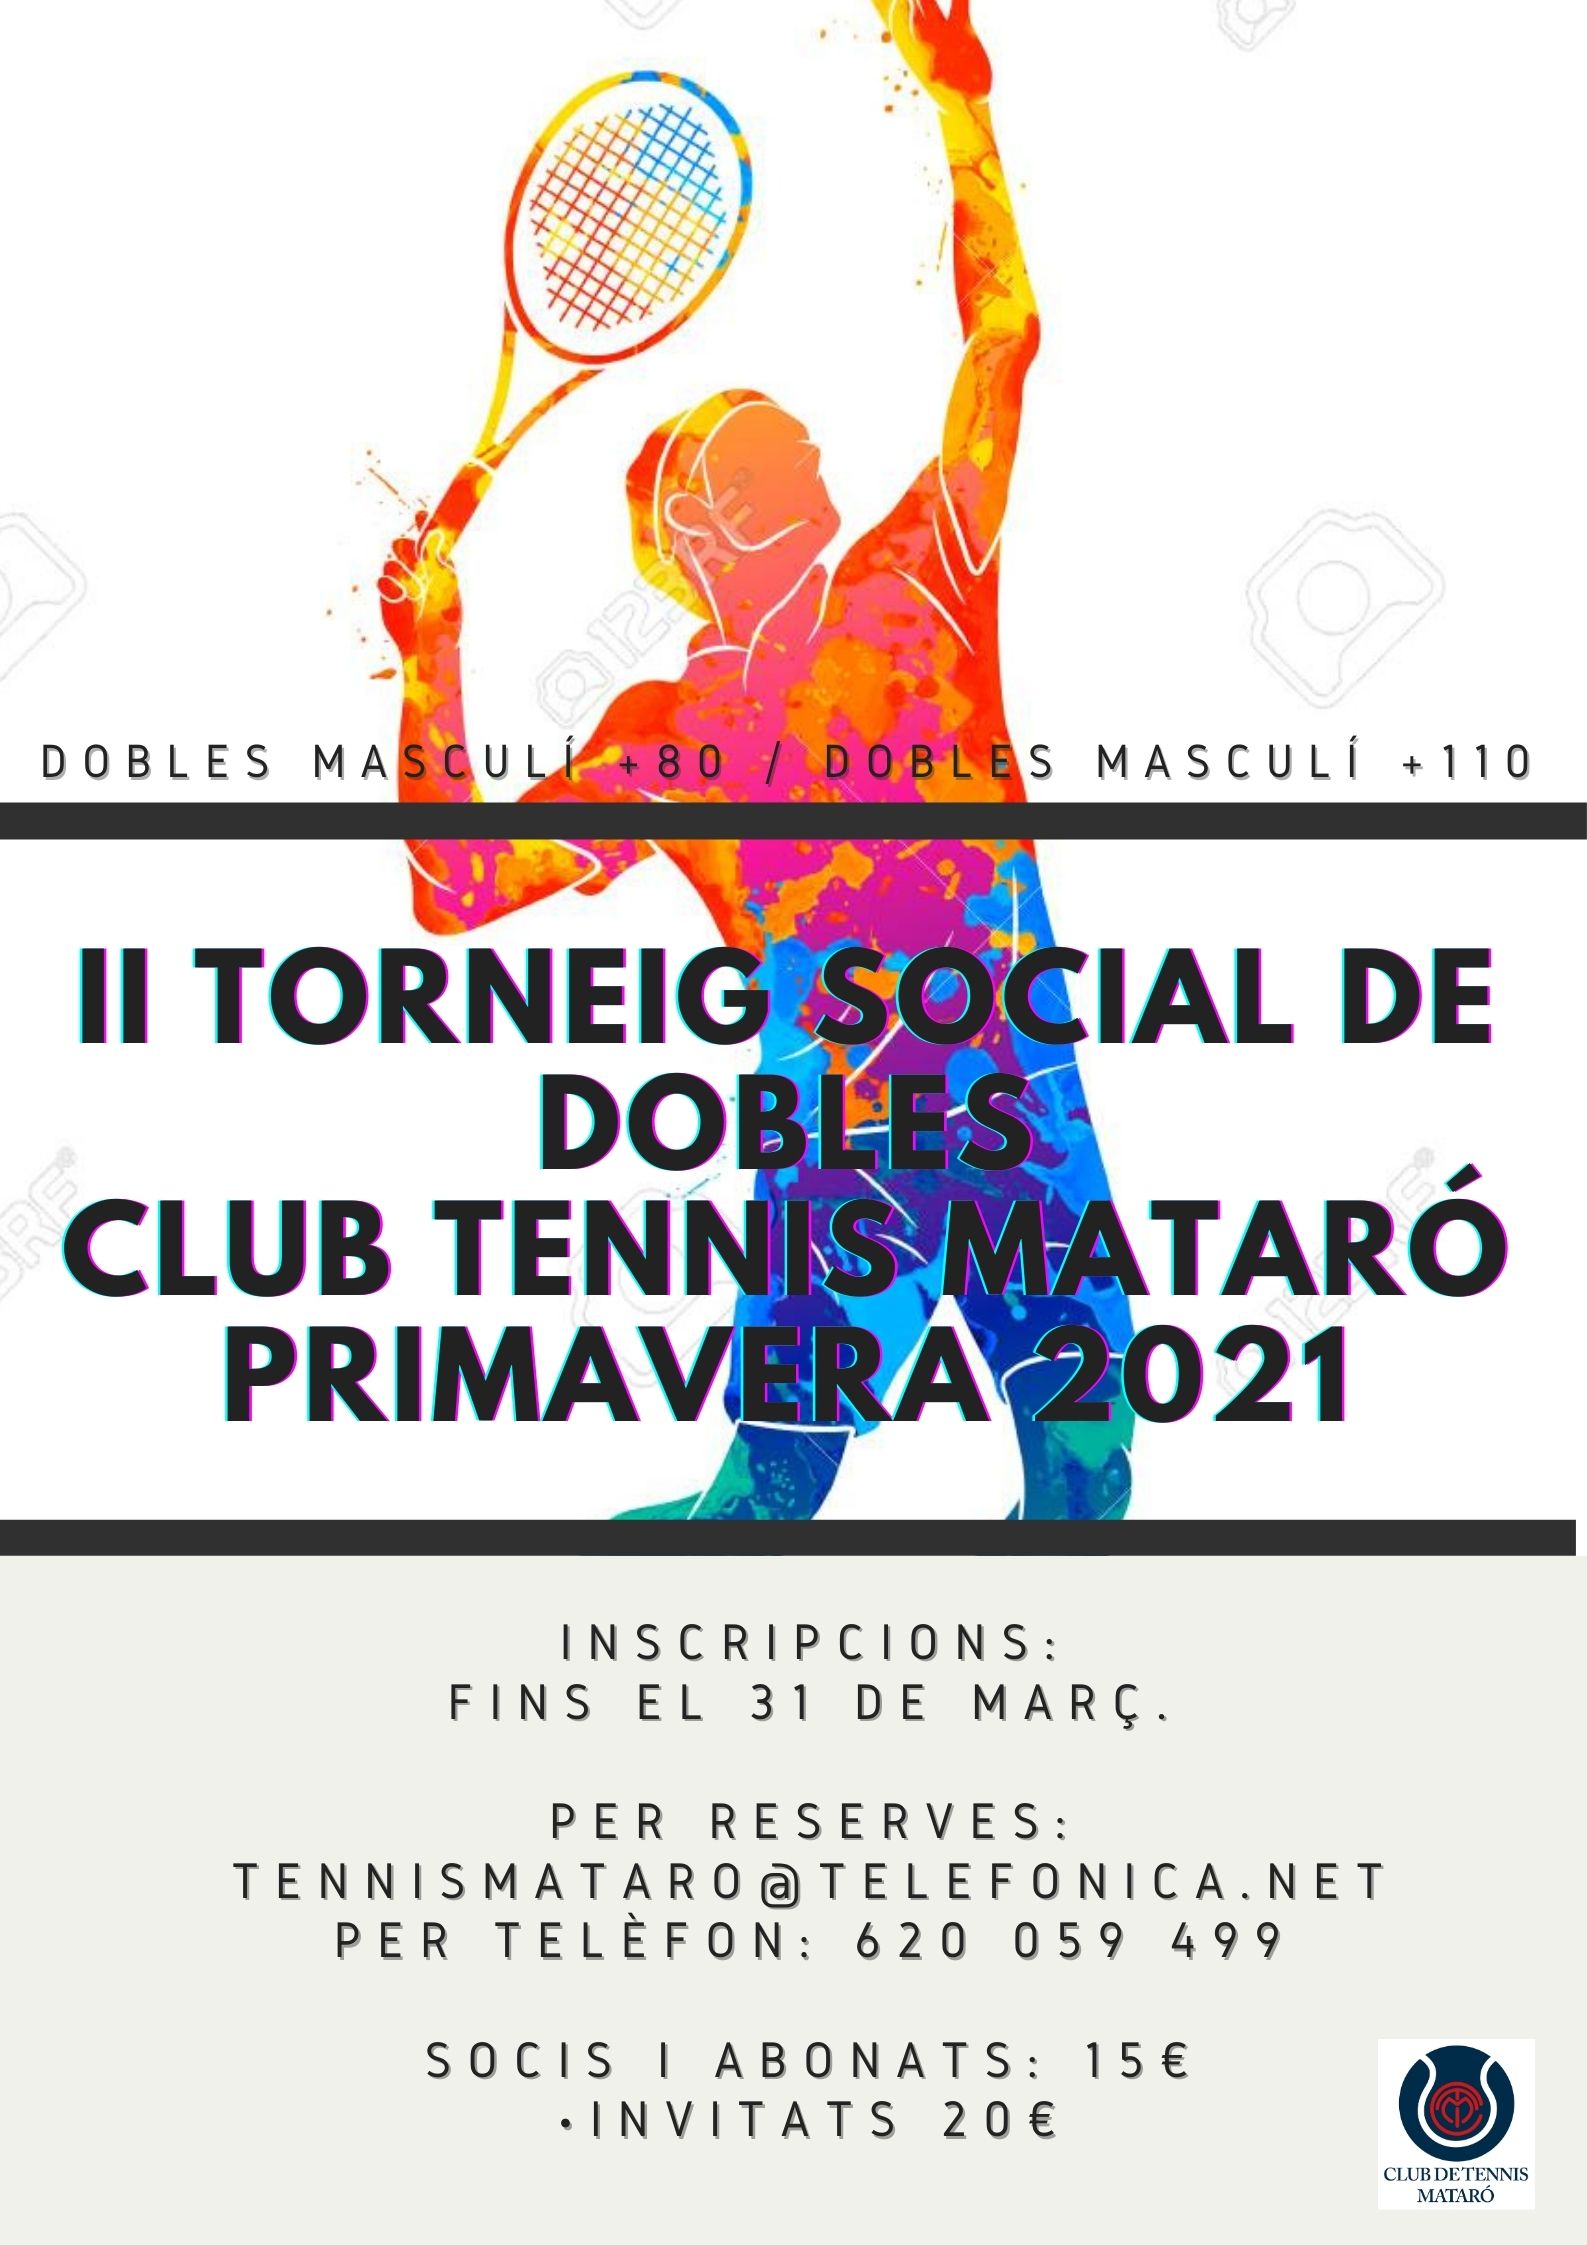 II TORNEIG SOCIAL DE DOBLES +80 / +110